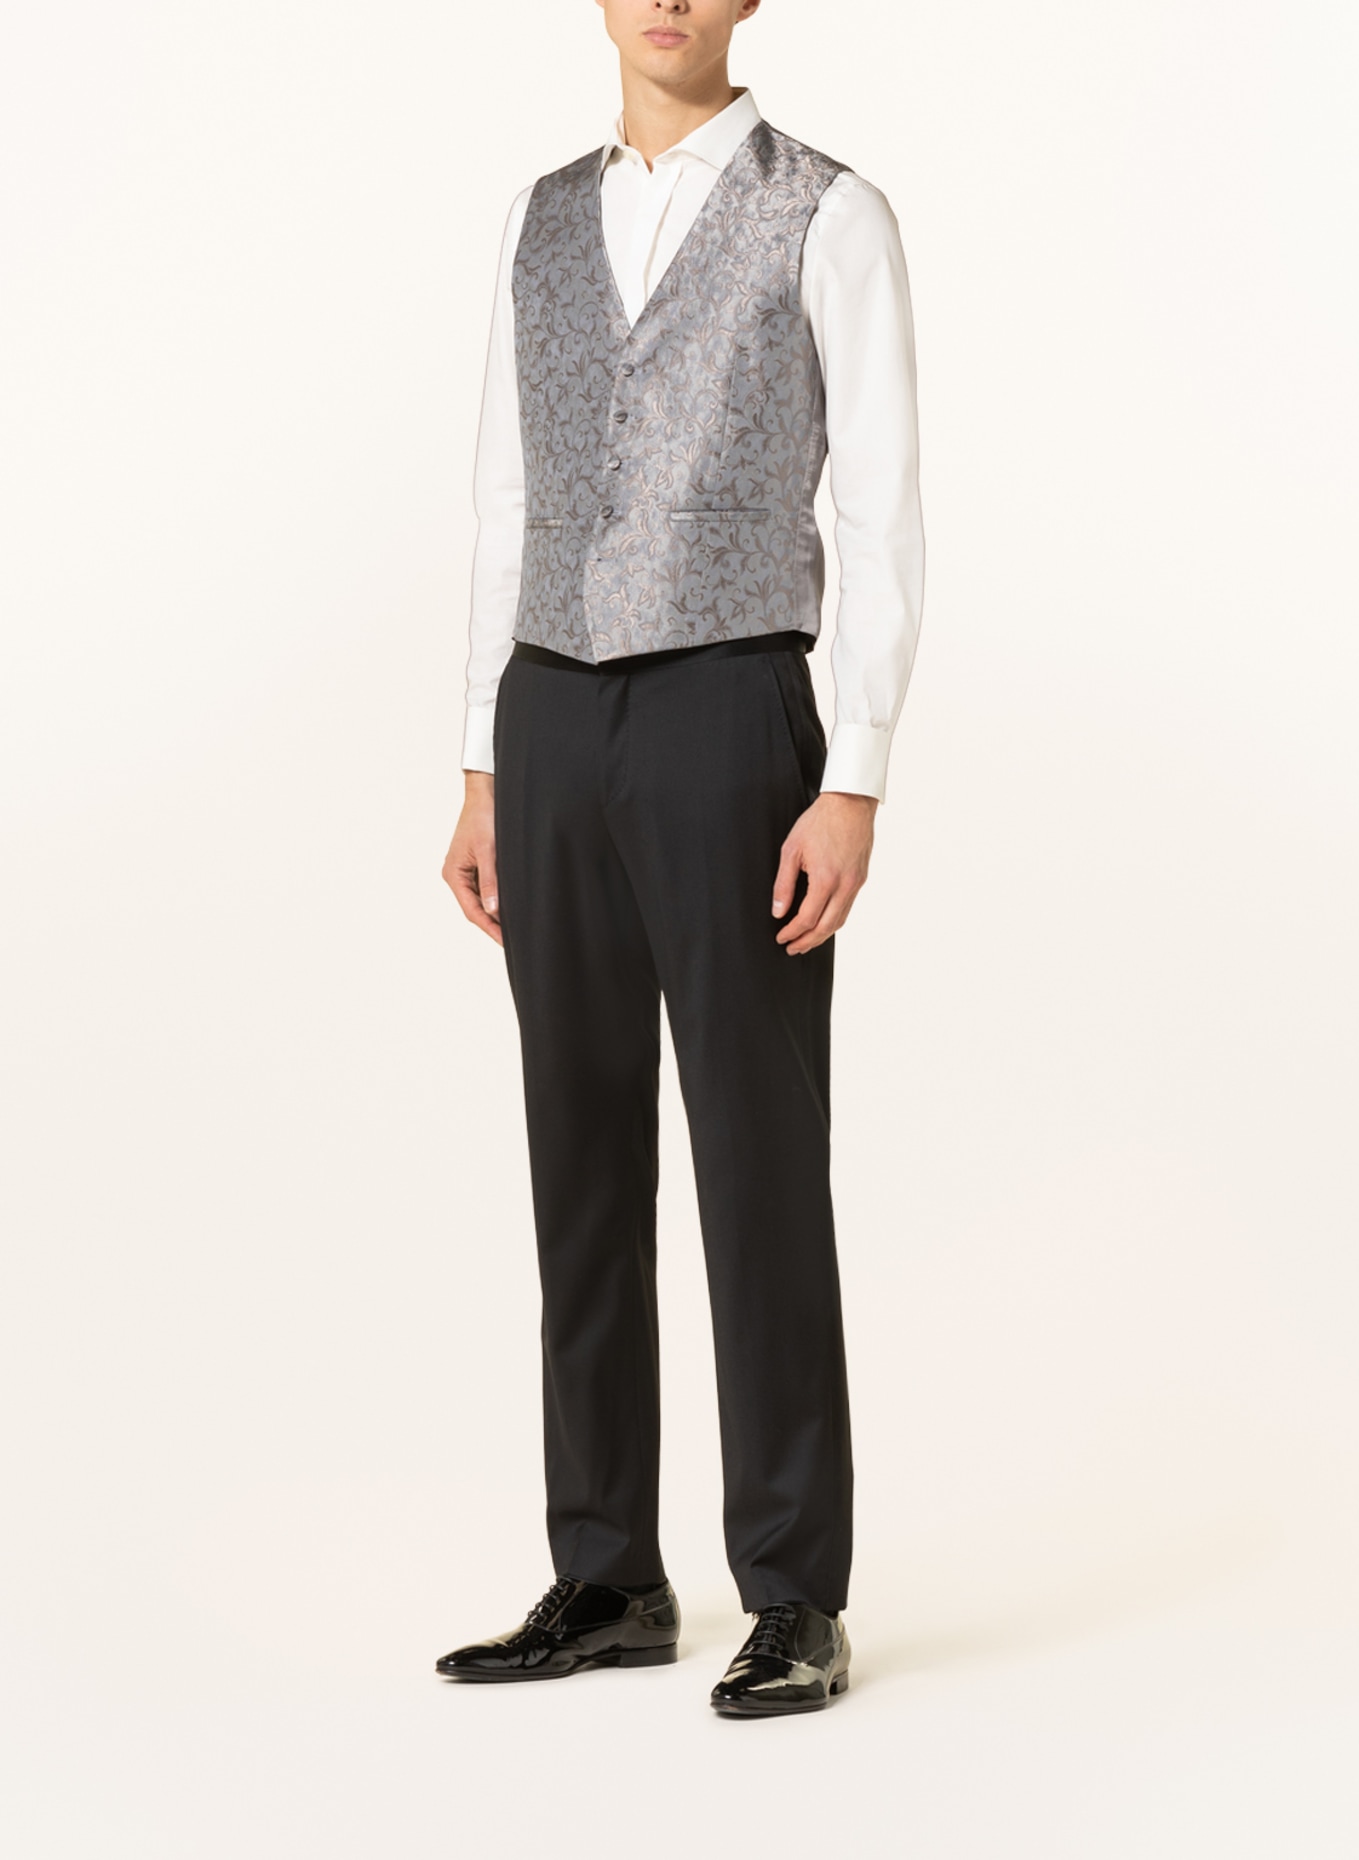 WILVORST Suit vest slim fit, Color: TAUPE/ LIGHT GRAY/ GRAY (Image 2)